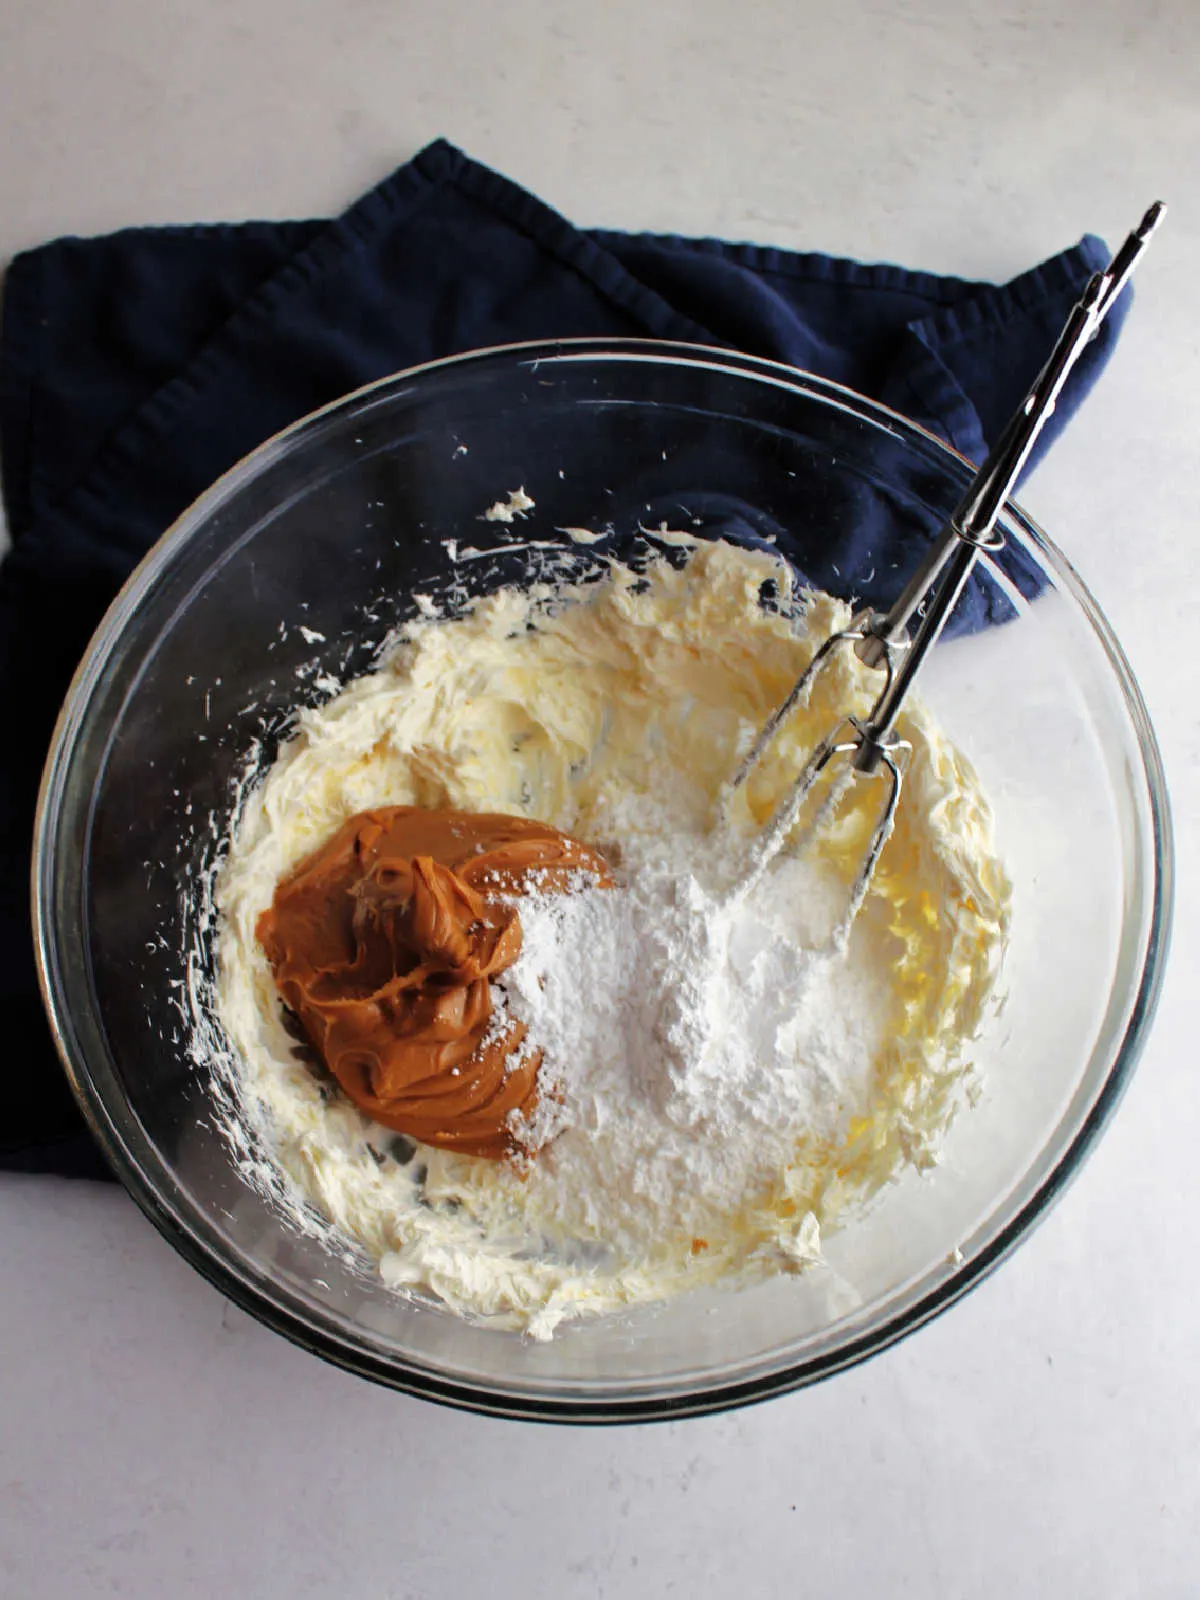 Adding peanut butter and powdered sugar to beaten cream cheese.